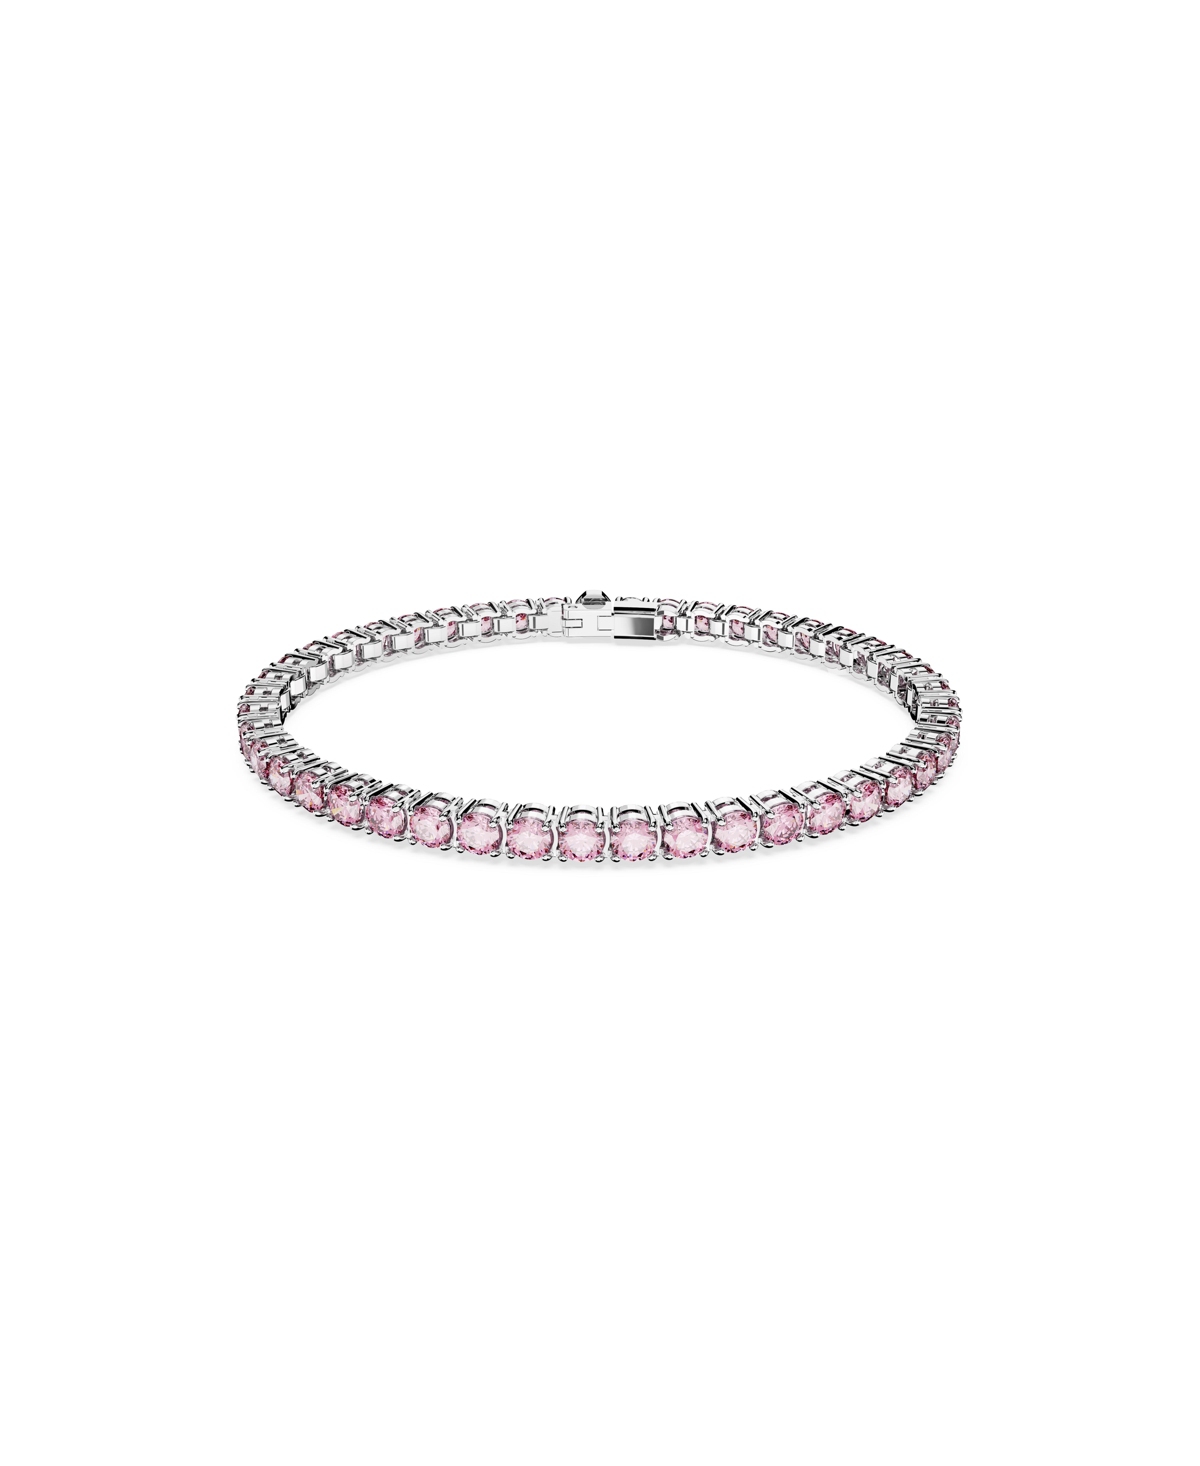 Shop Swarovski Crystal Matrix Tennis Bracelet Round Cut Pink Rhodium Plated